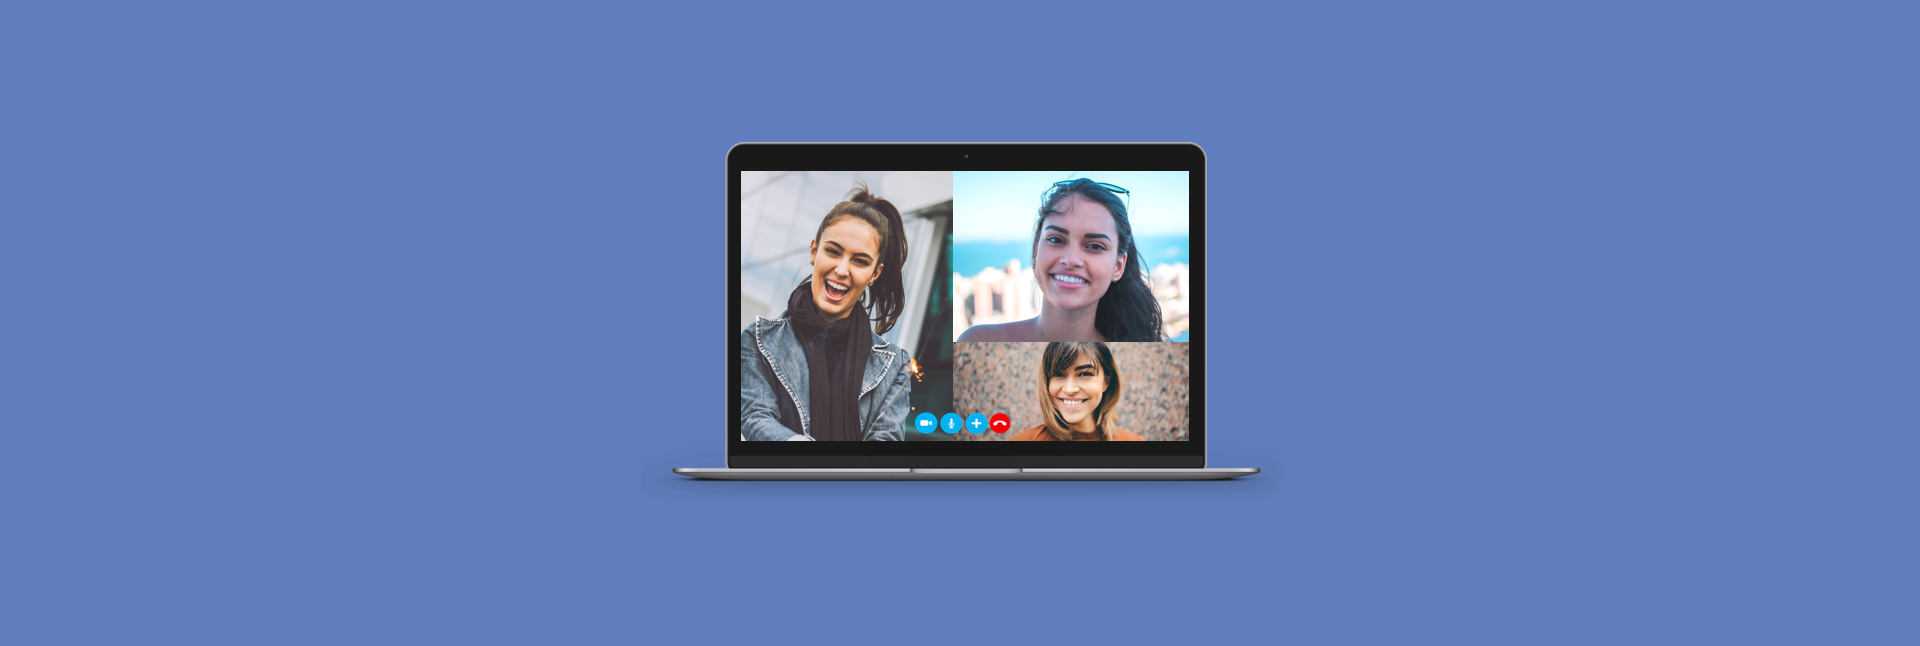 how do you use skype on a mac